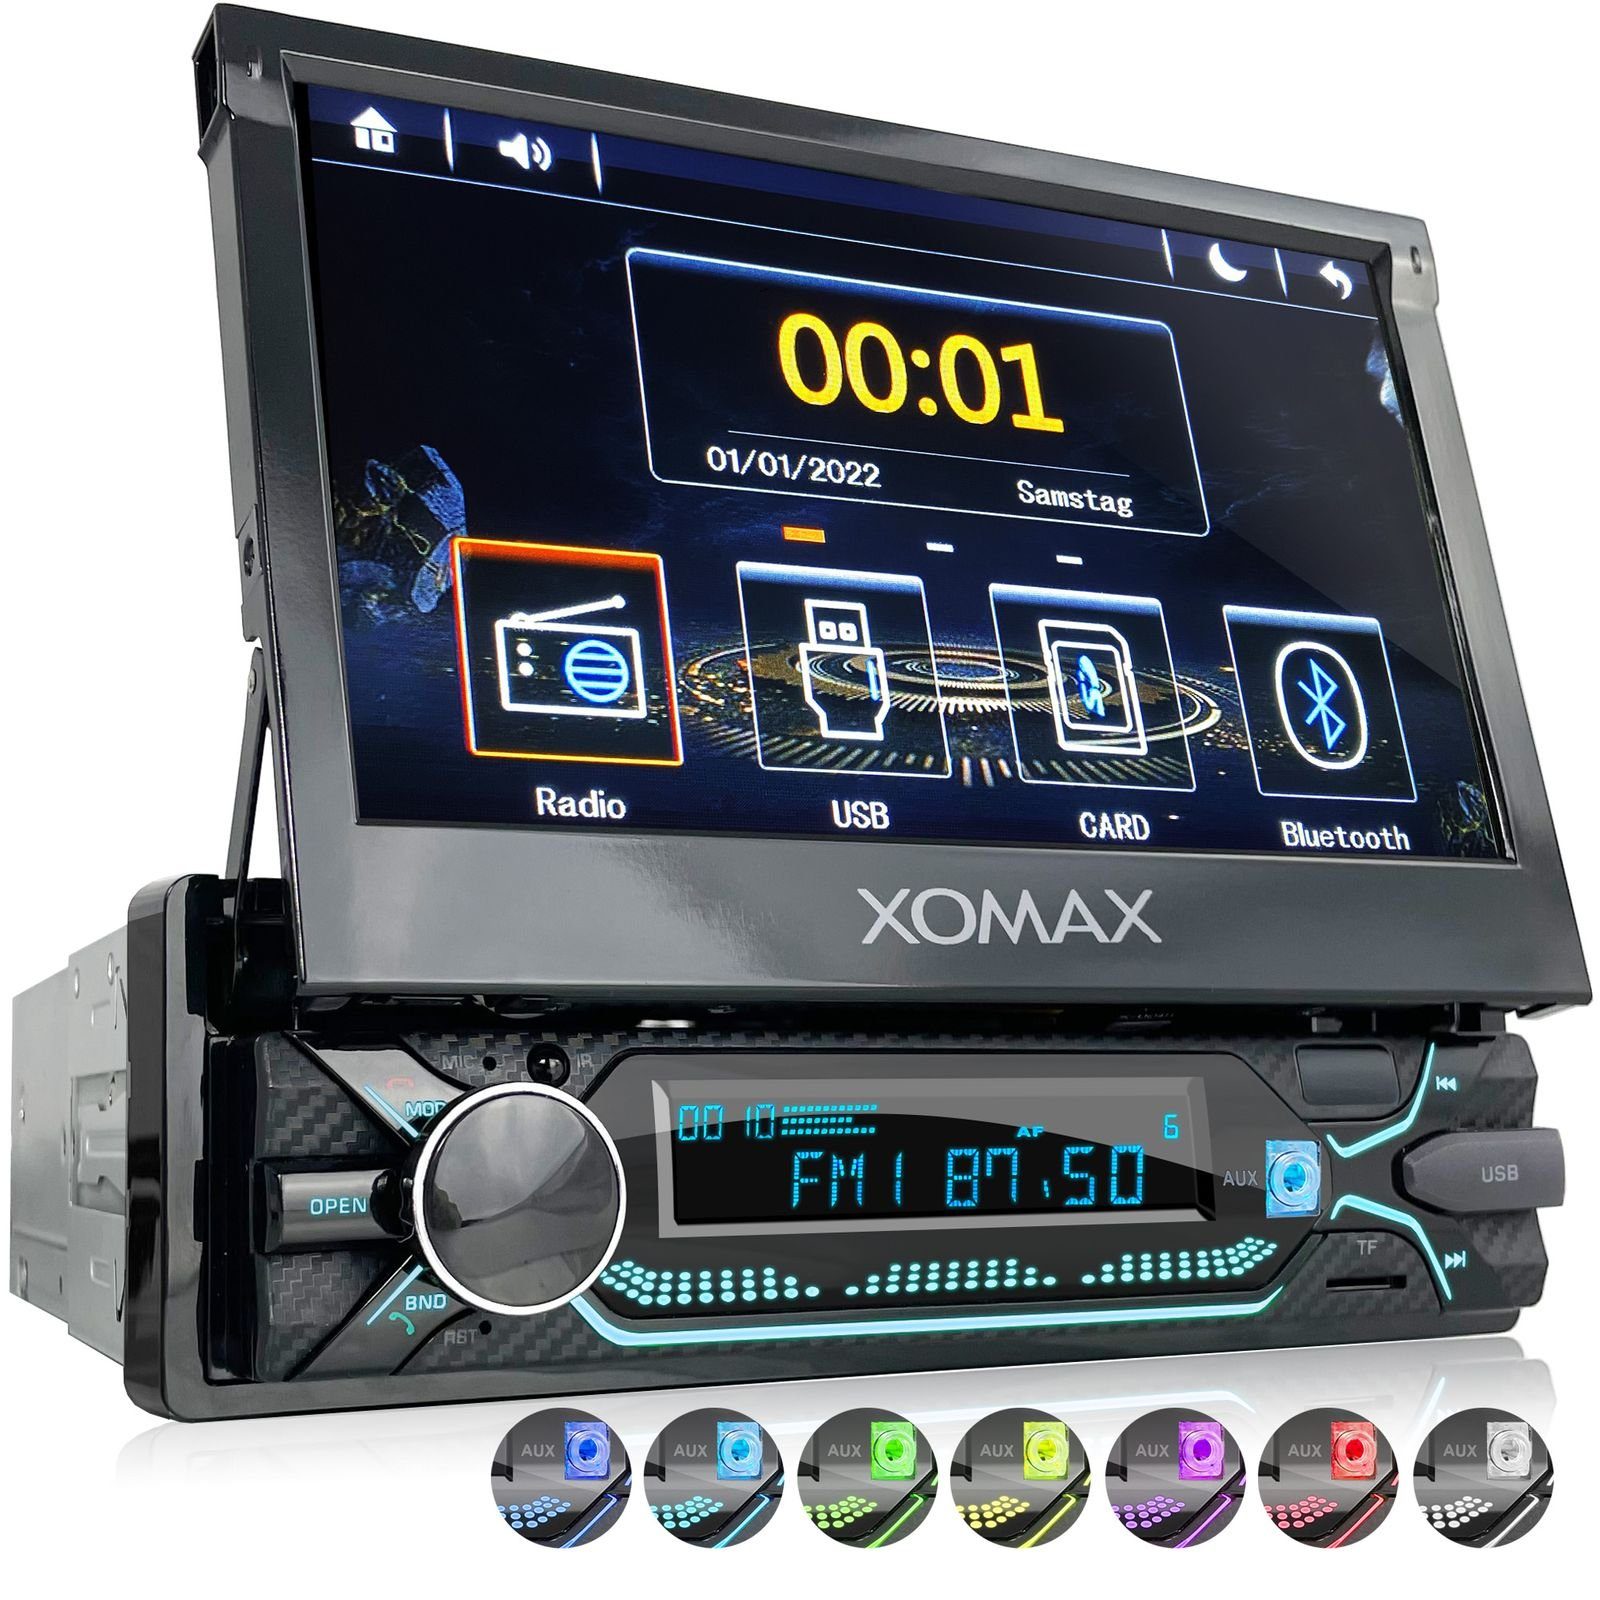 XOMAX XM-V747 Autoradio mit 7 Zoll Bildschirm, Bluetooth, USB, SD